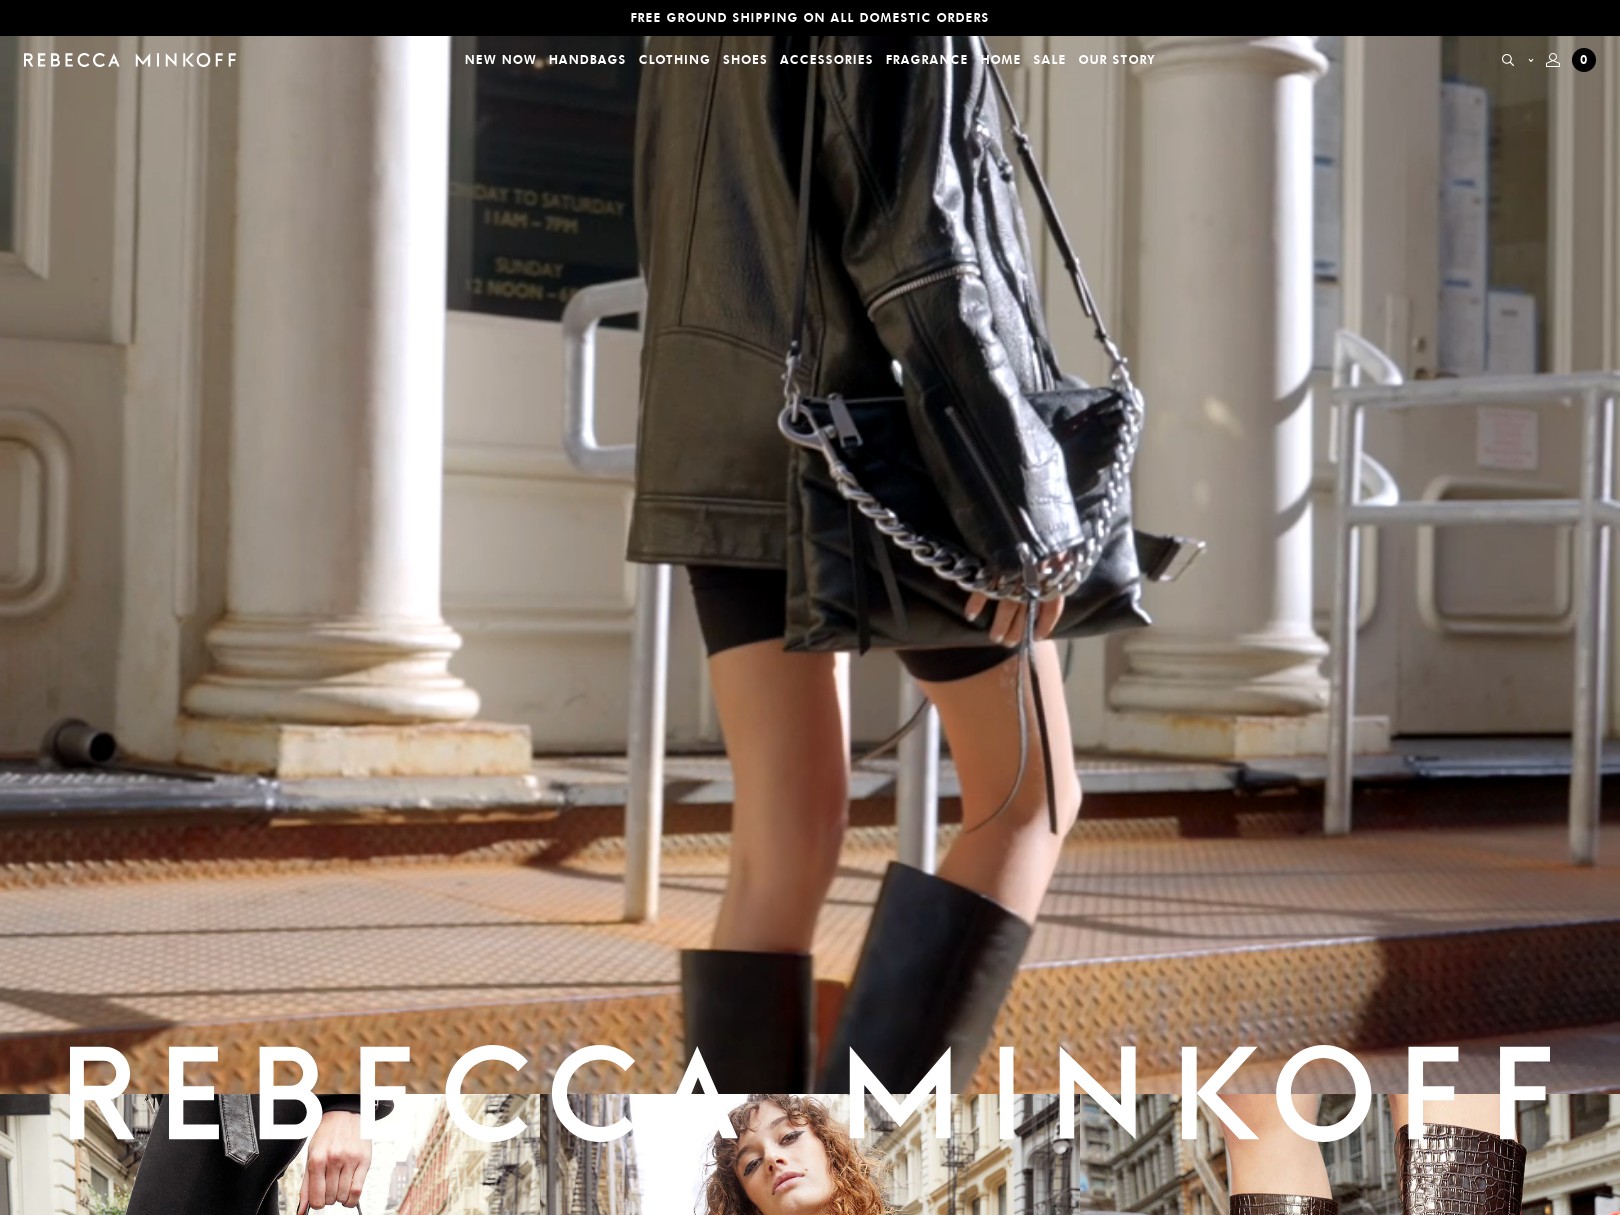 Handbags, Clothing, Shoes, & Accessories, Rebecca Minkoff